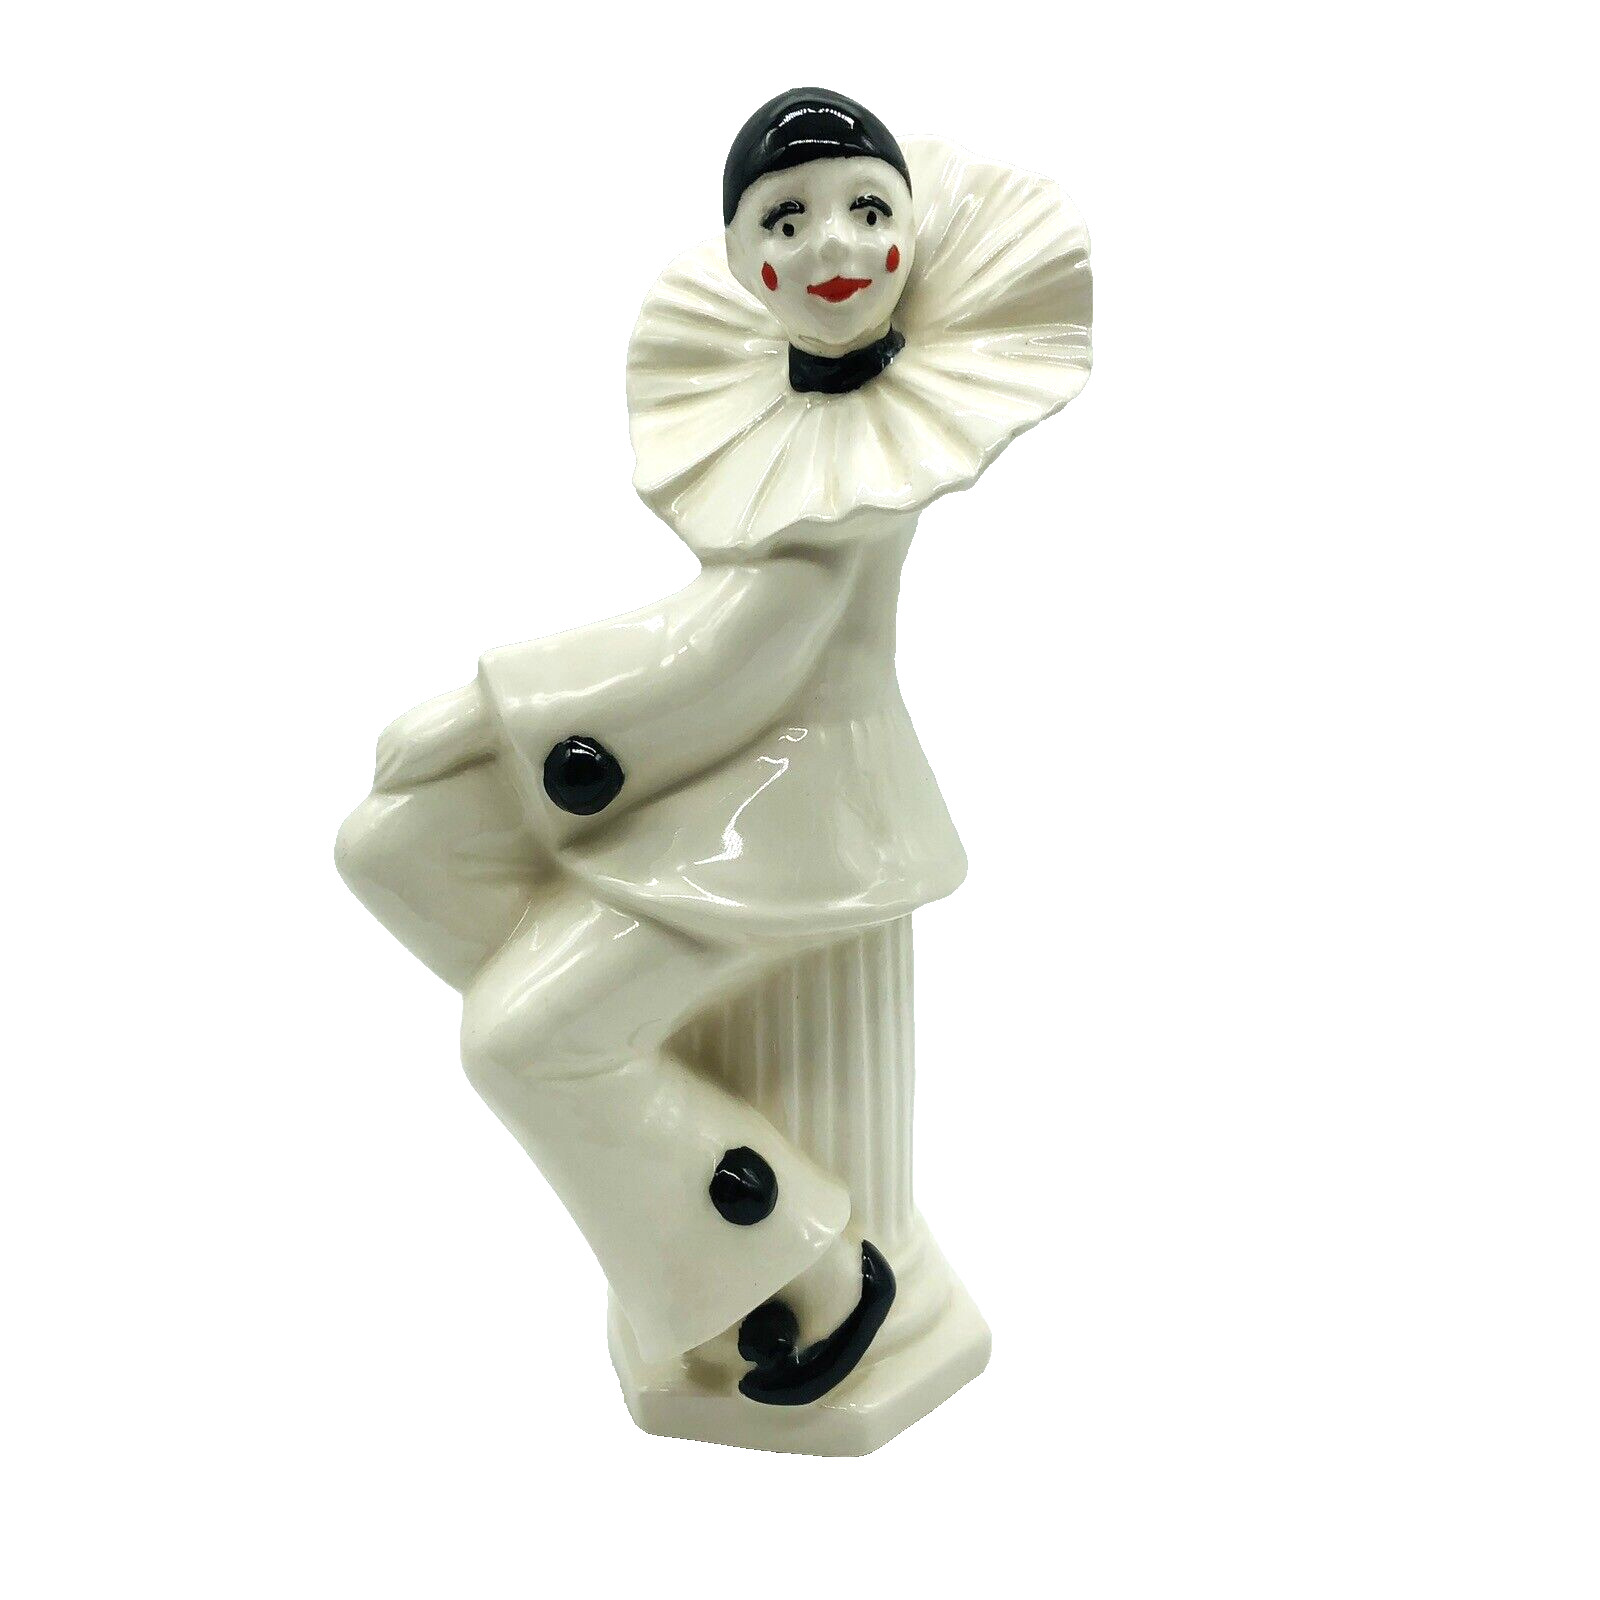 Vintage Pierrot Clown Ceramic Figurine Hand Painted Unique White Black